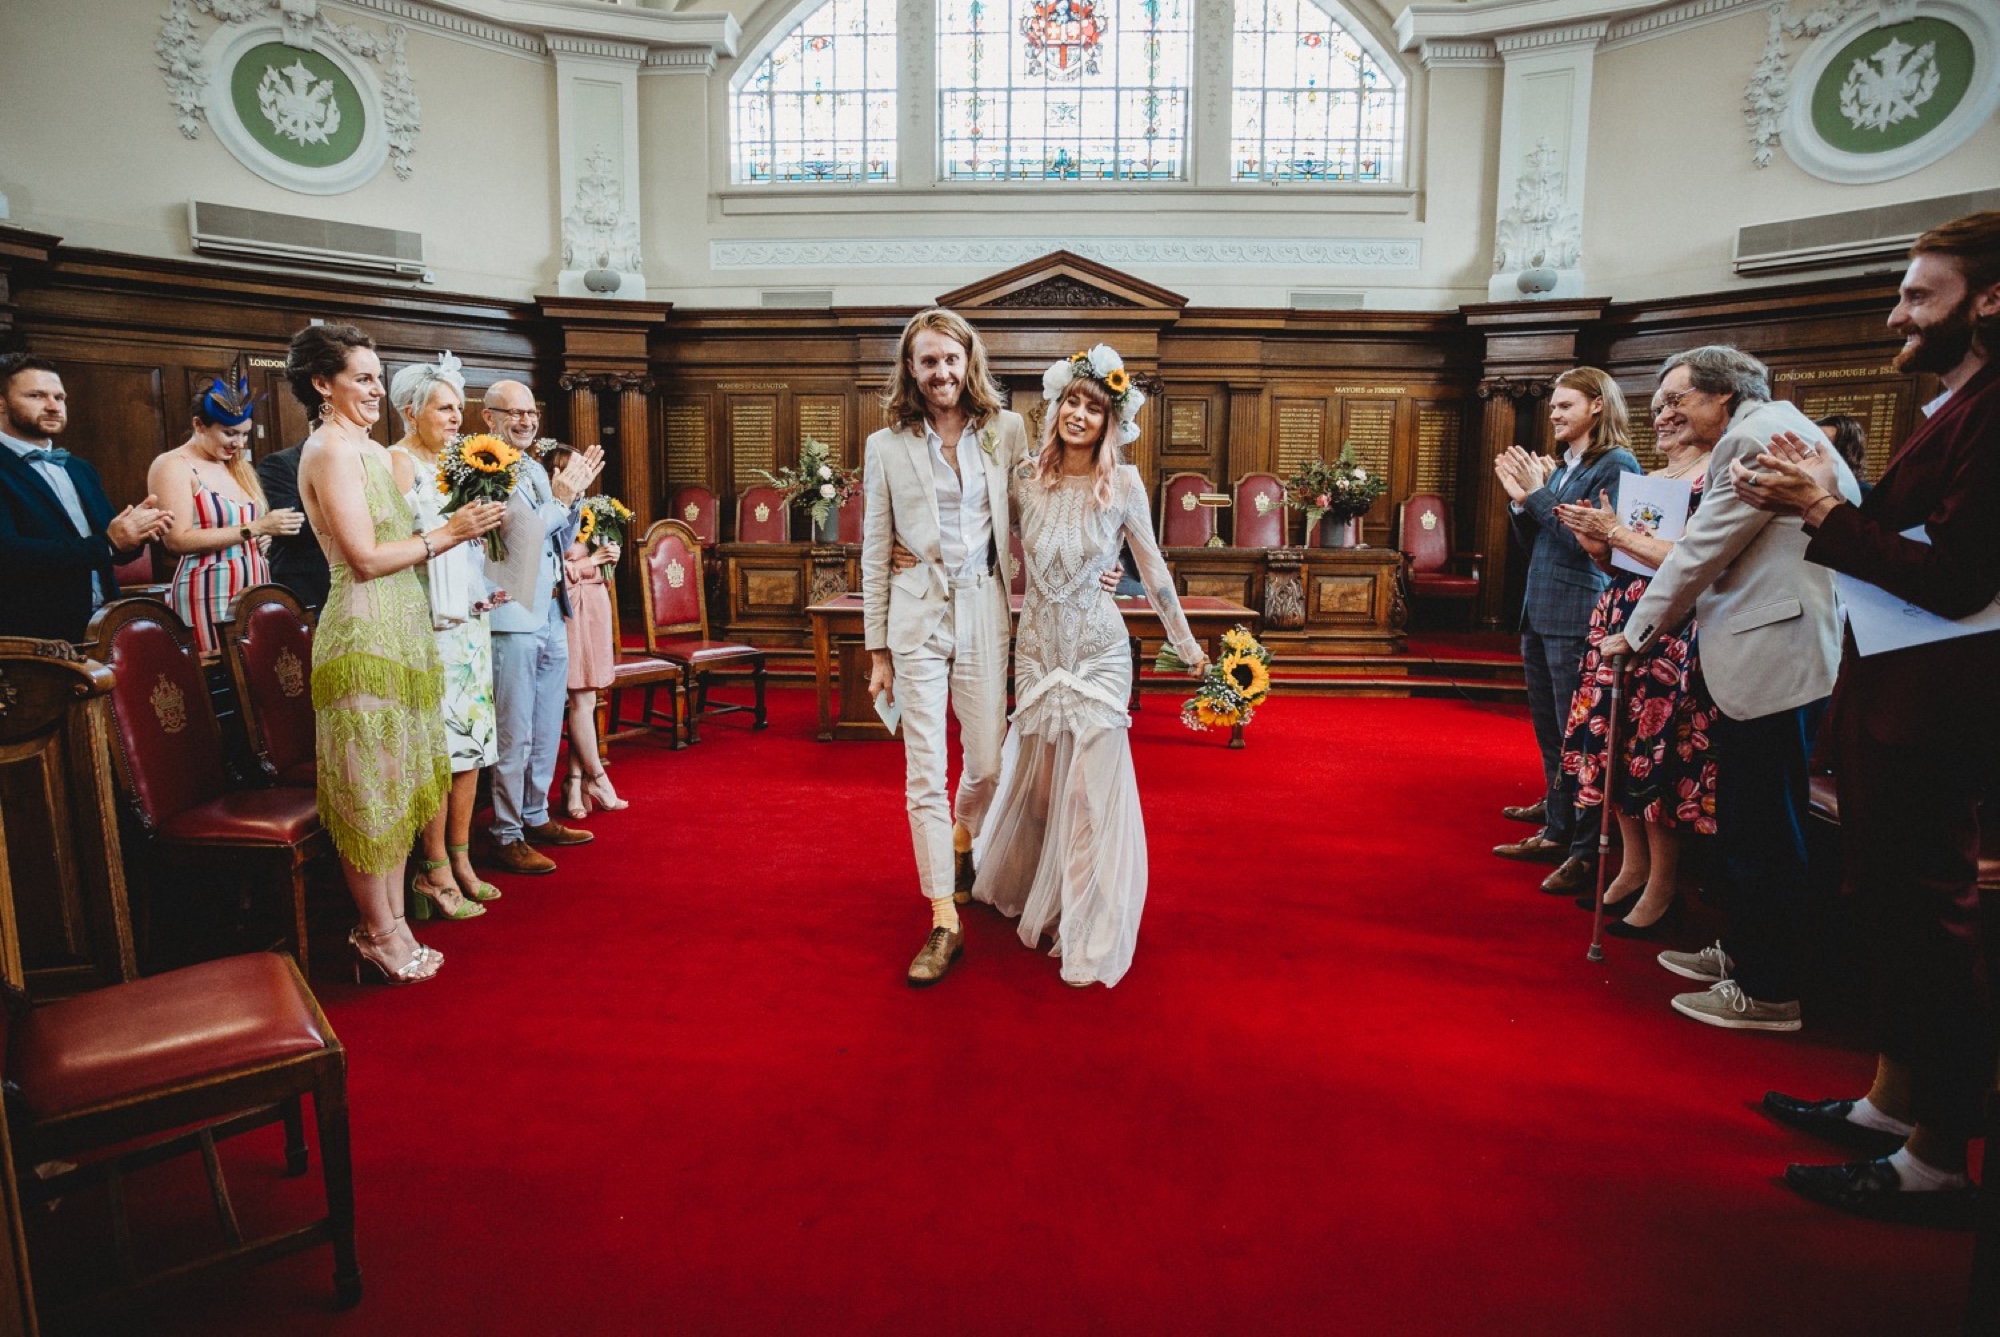 hackney London wedding ceremony by zakas photography 